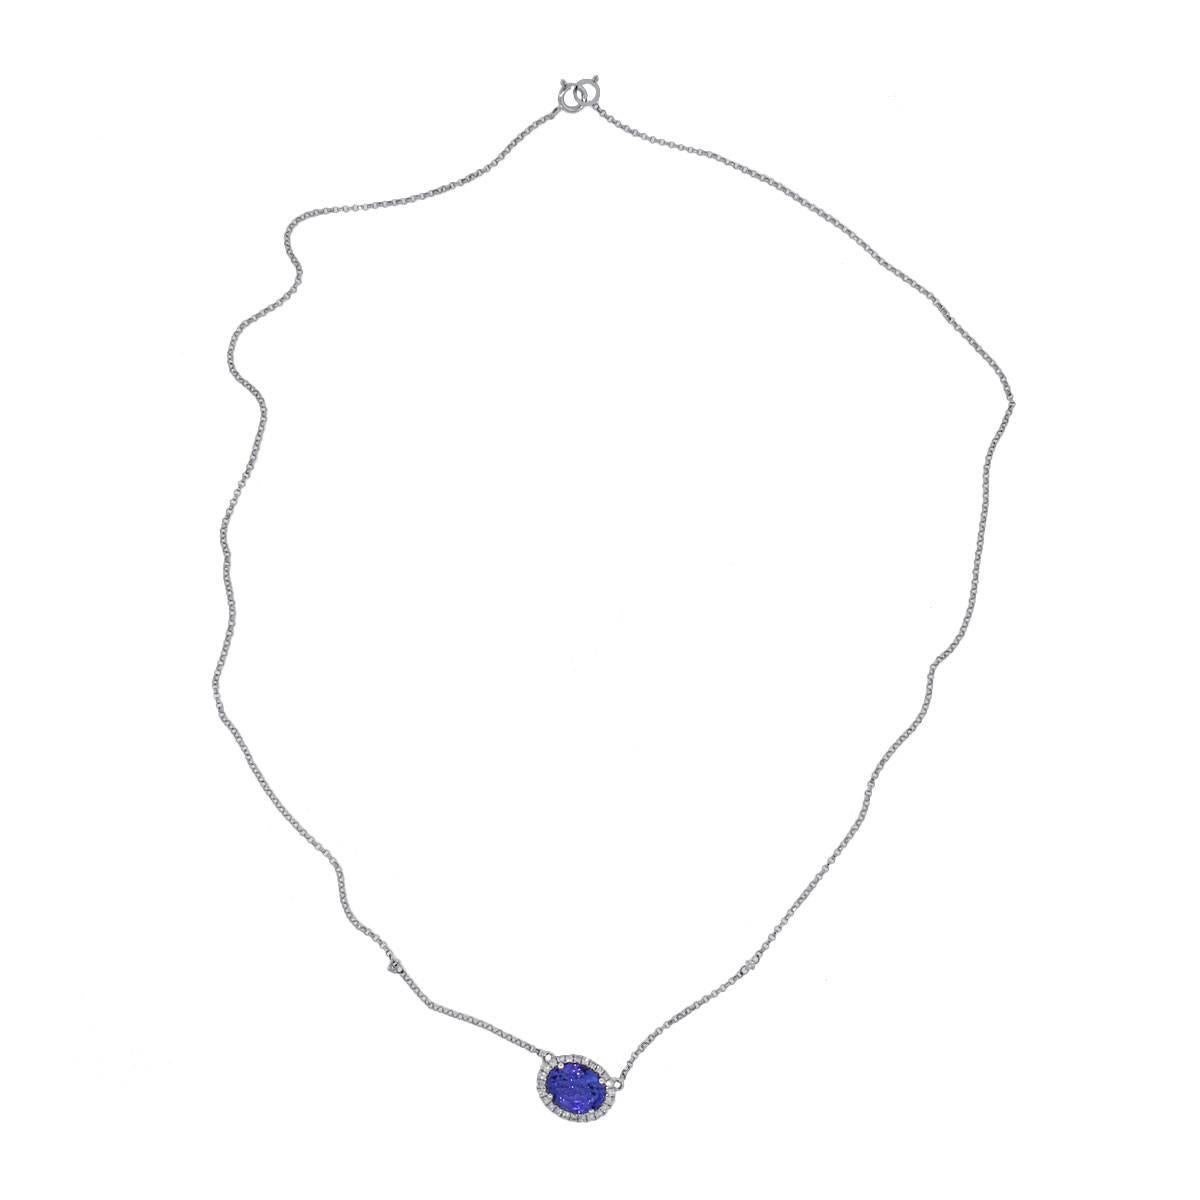 Oval Cut Tanzanite and Diamond Necklace